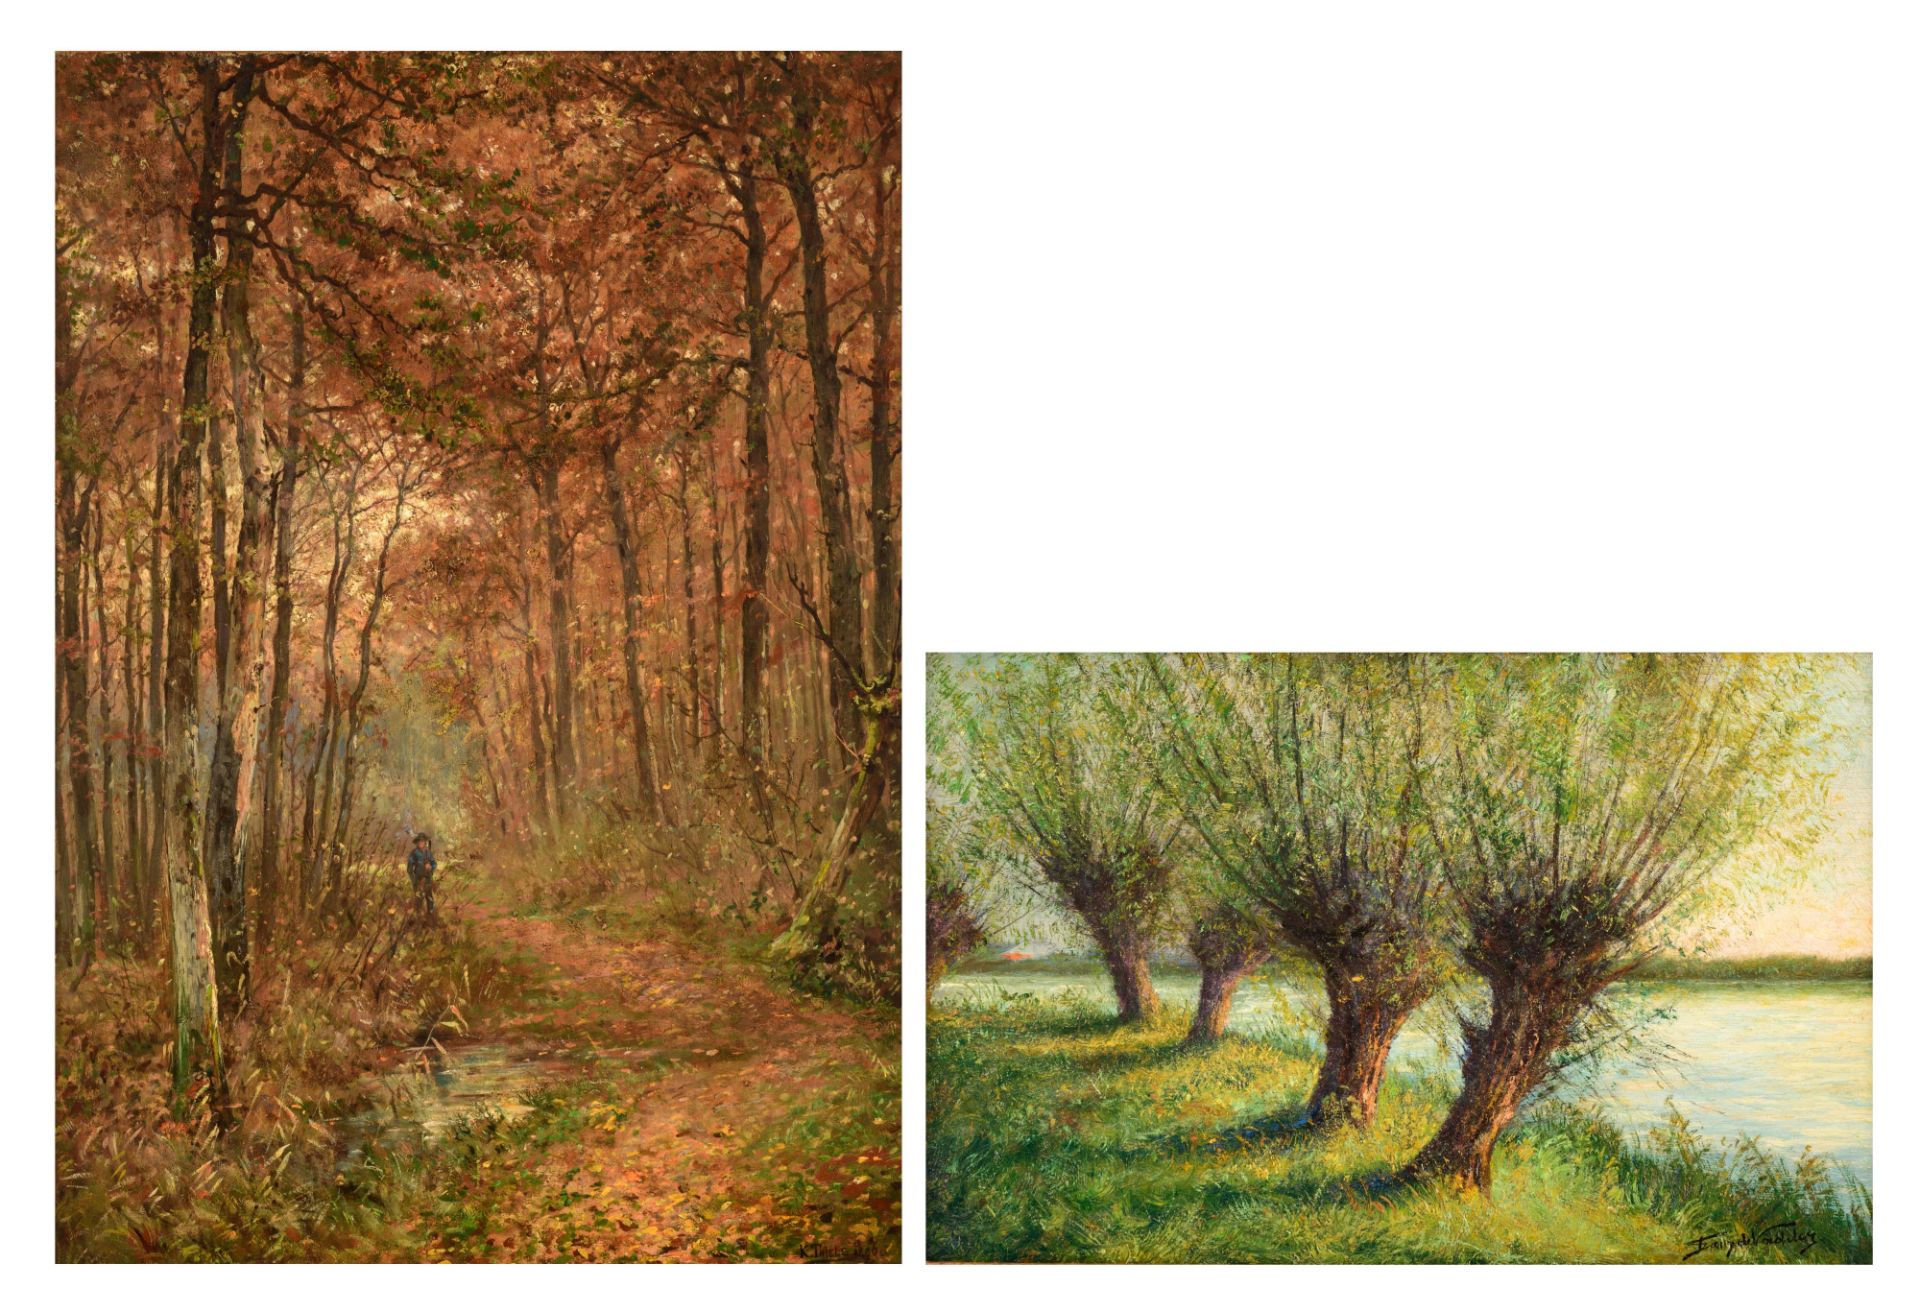 De Vadder F. pollard willows near the shore, oil on triplex, 35 x 53 cm. Added: Thiele K., a forest